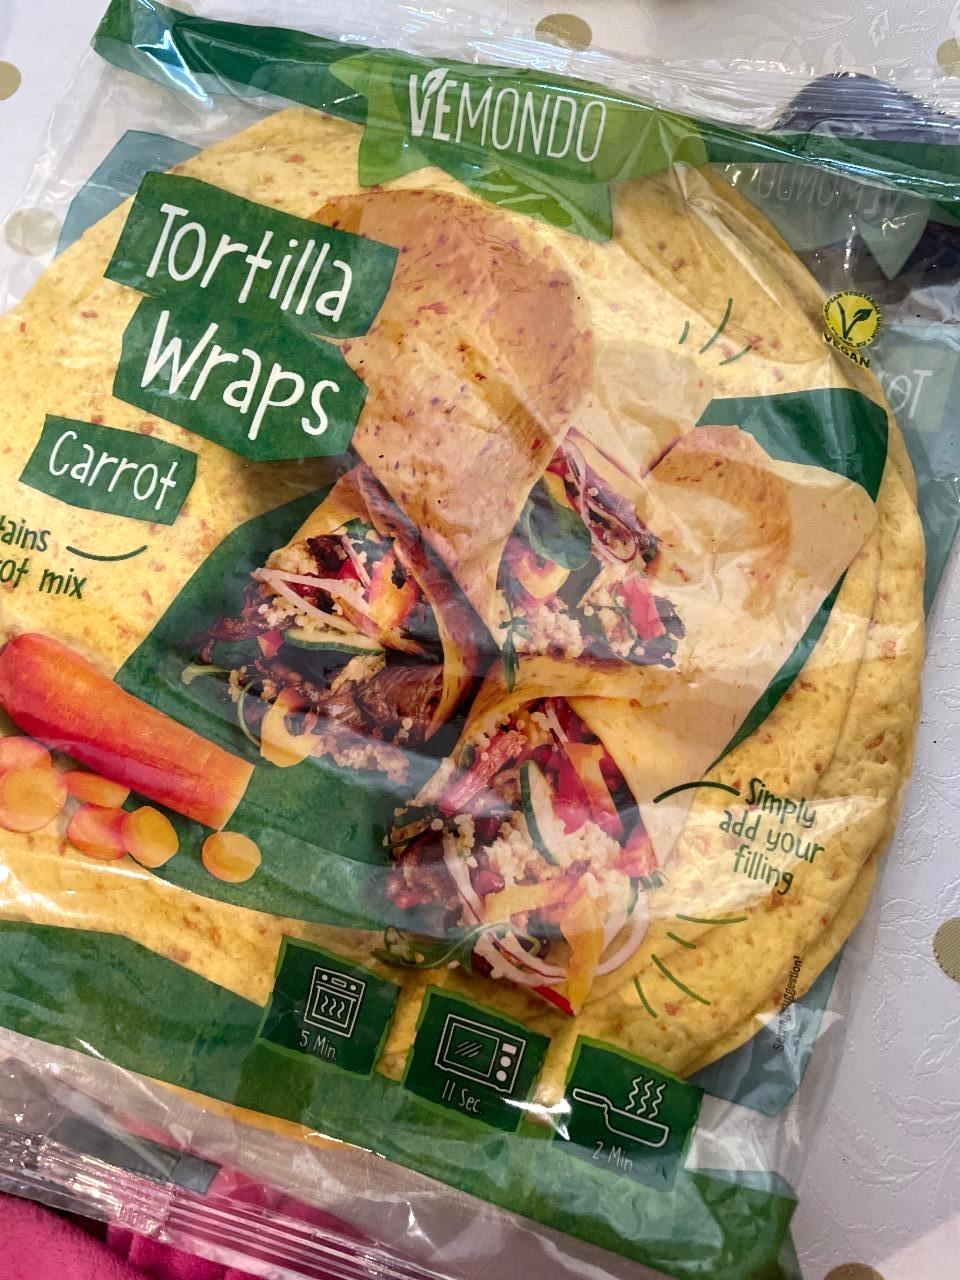 Képek - Tortilla wraps carrot Vemondo